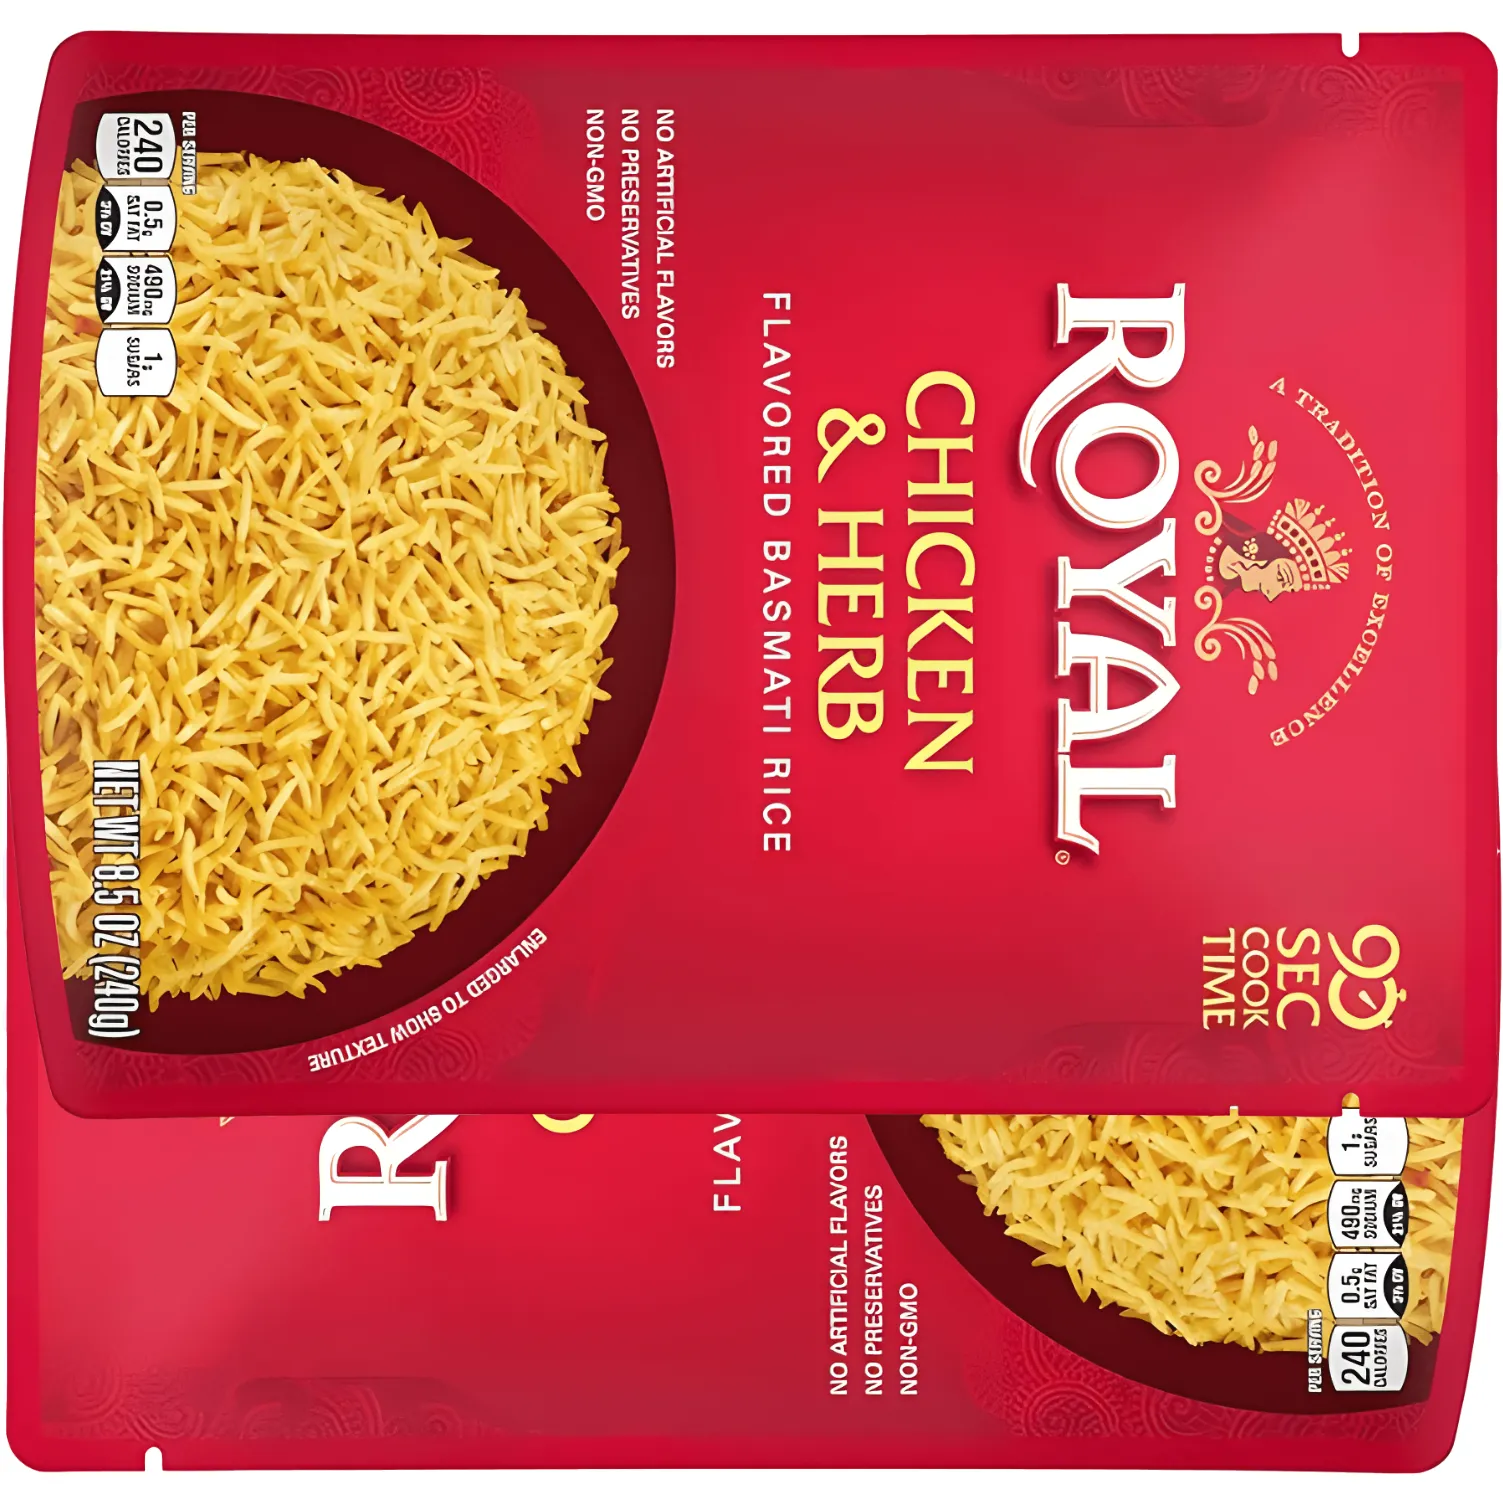 Free Royal Ready-To-Heat Rice At Publix